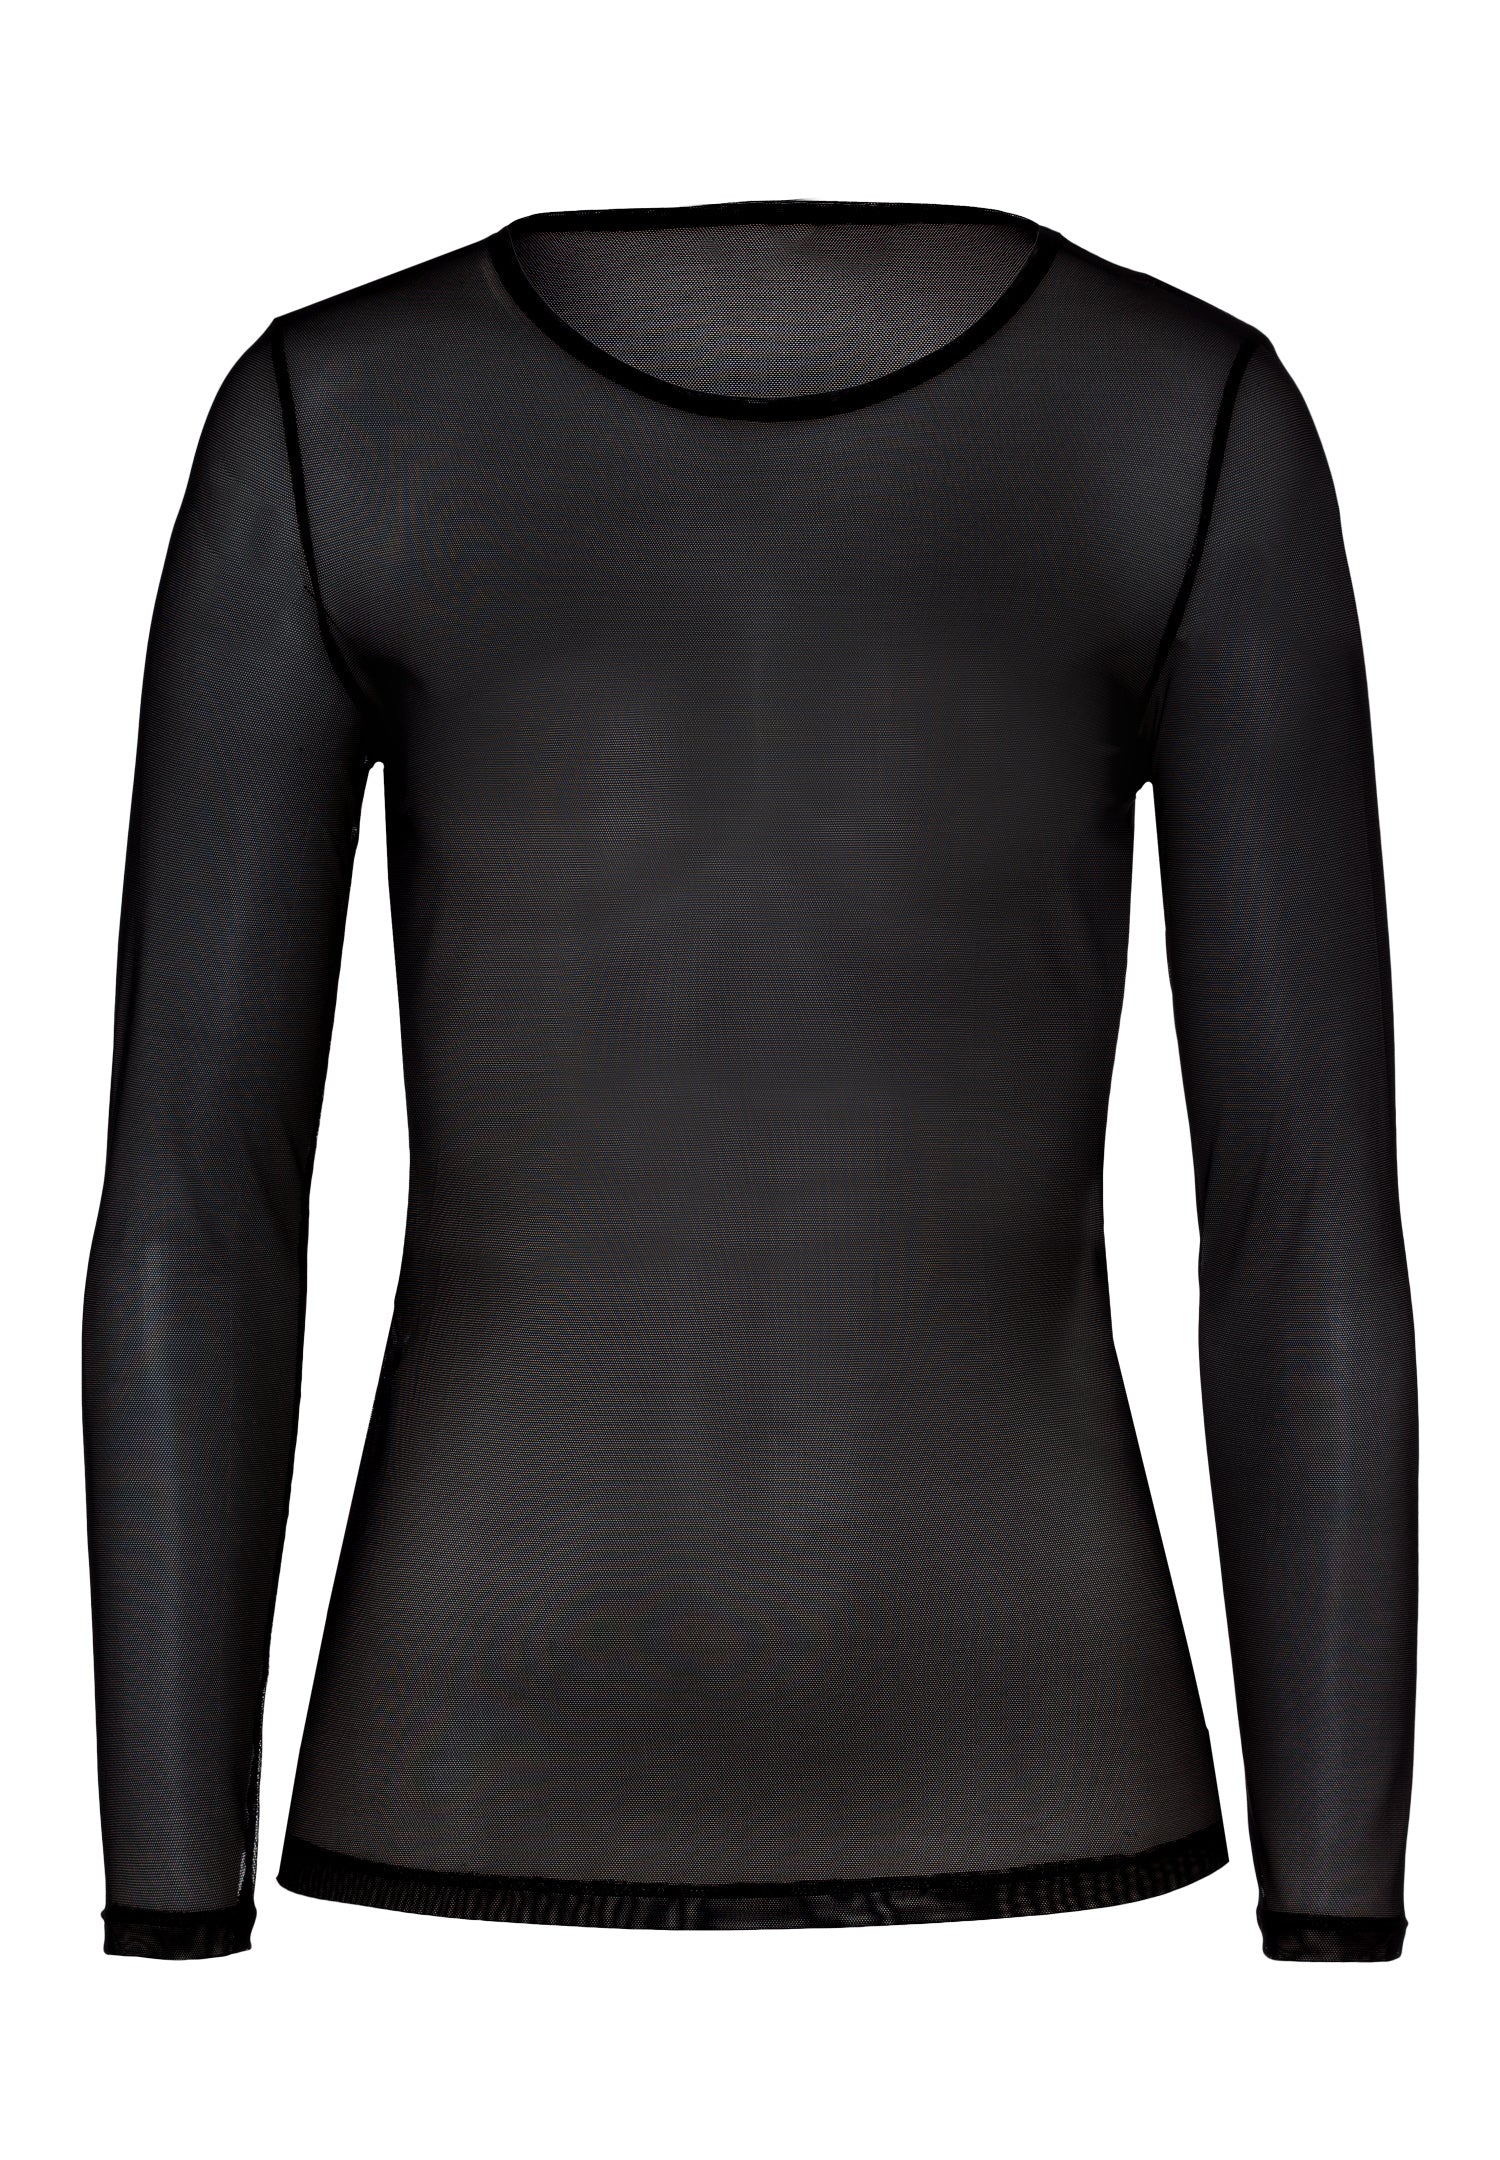 71298 Smooth Illusion Long Sleeve Shirt - 019 Black